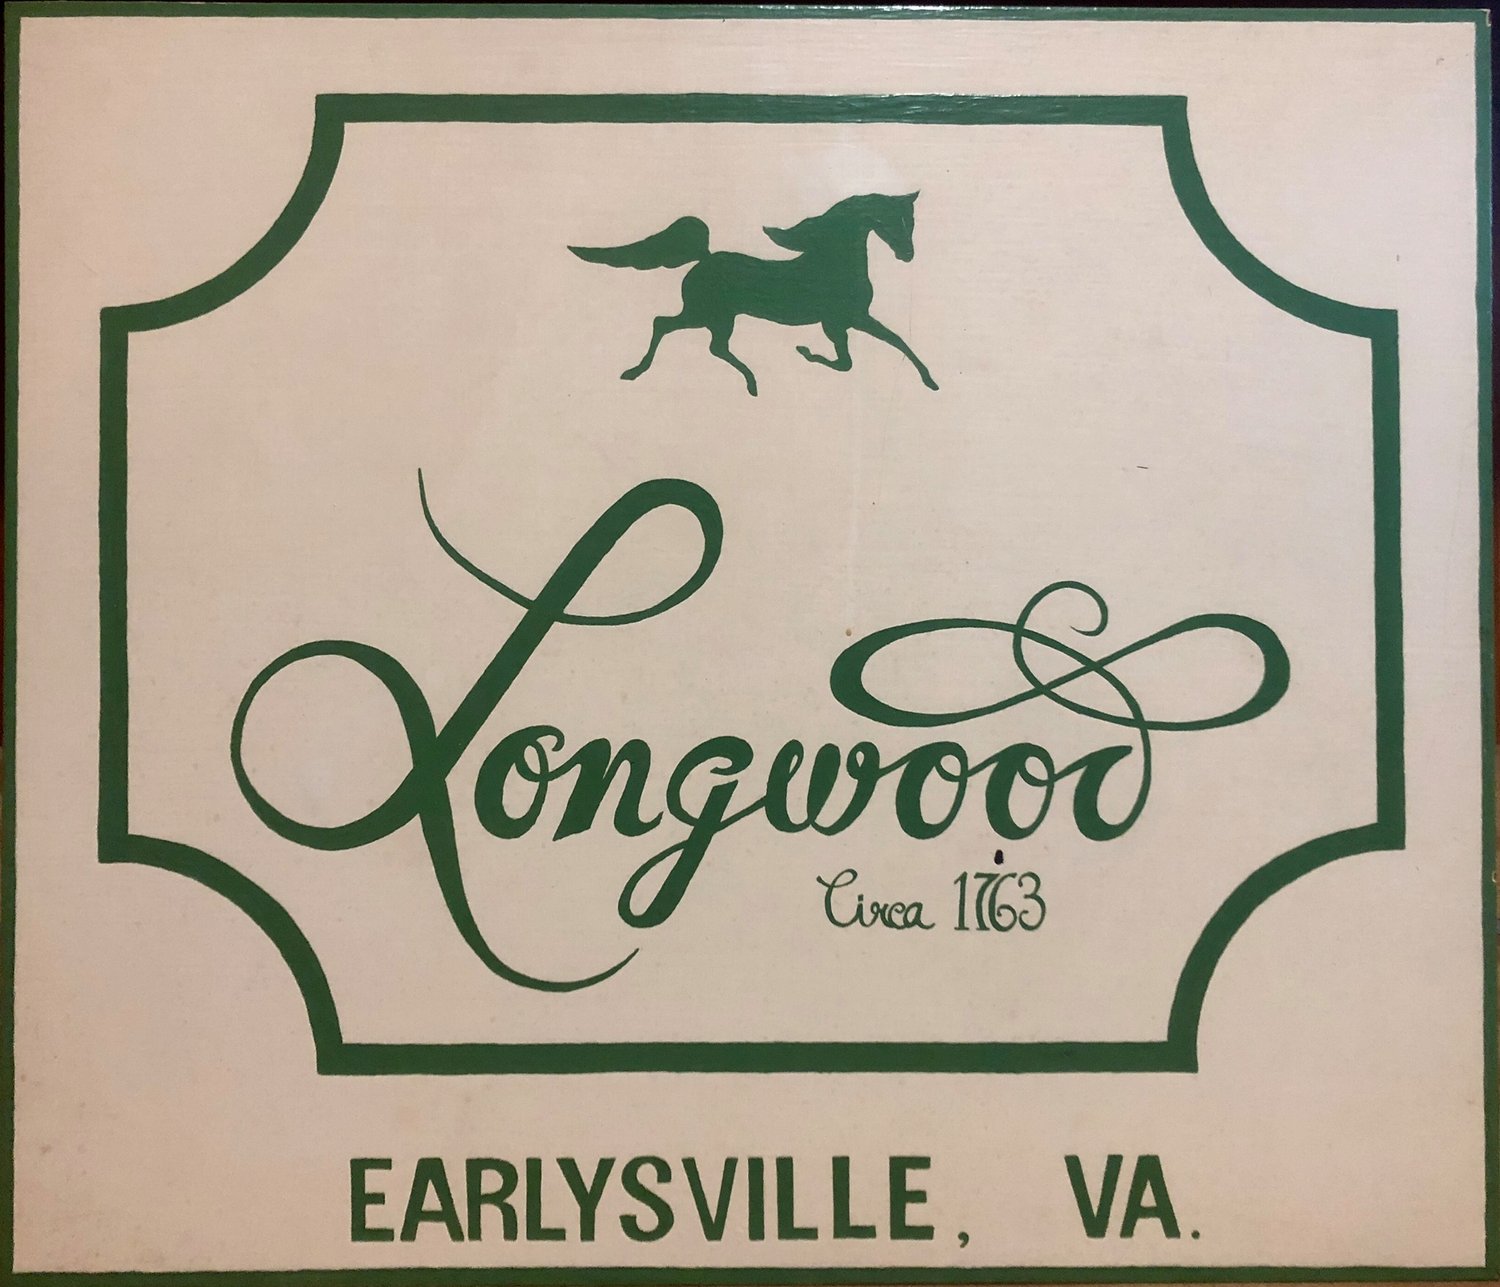 Longwood Stables: Horse Boarding near Charlottesville, VA